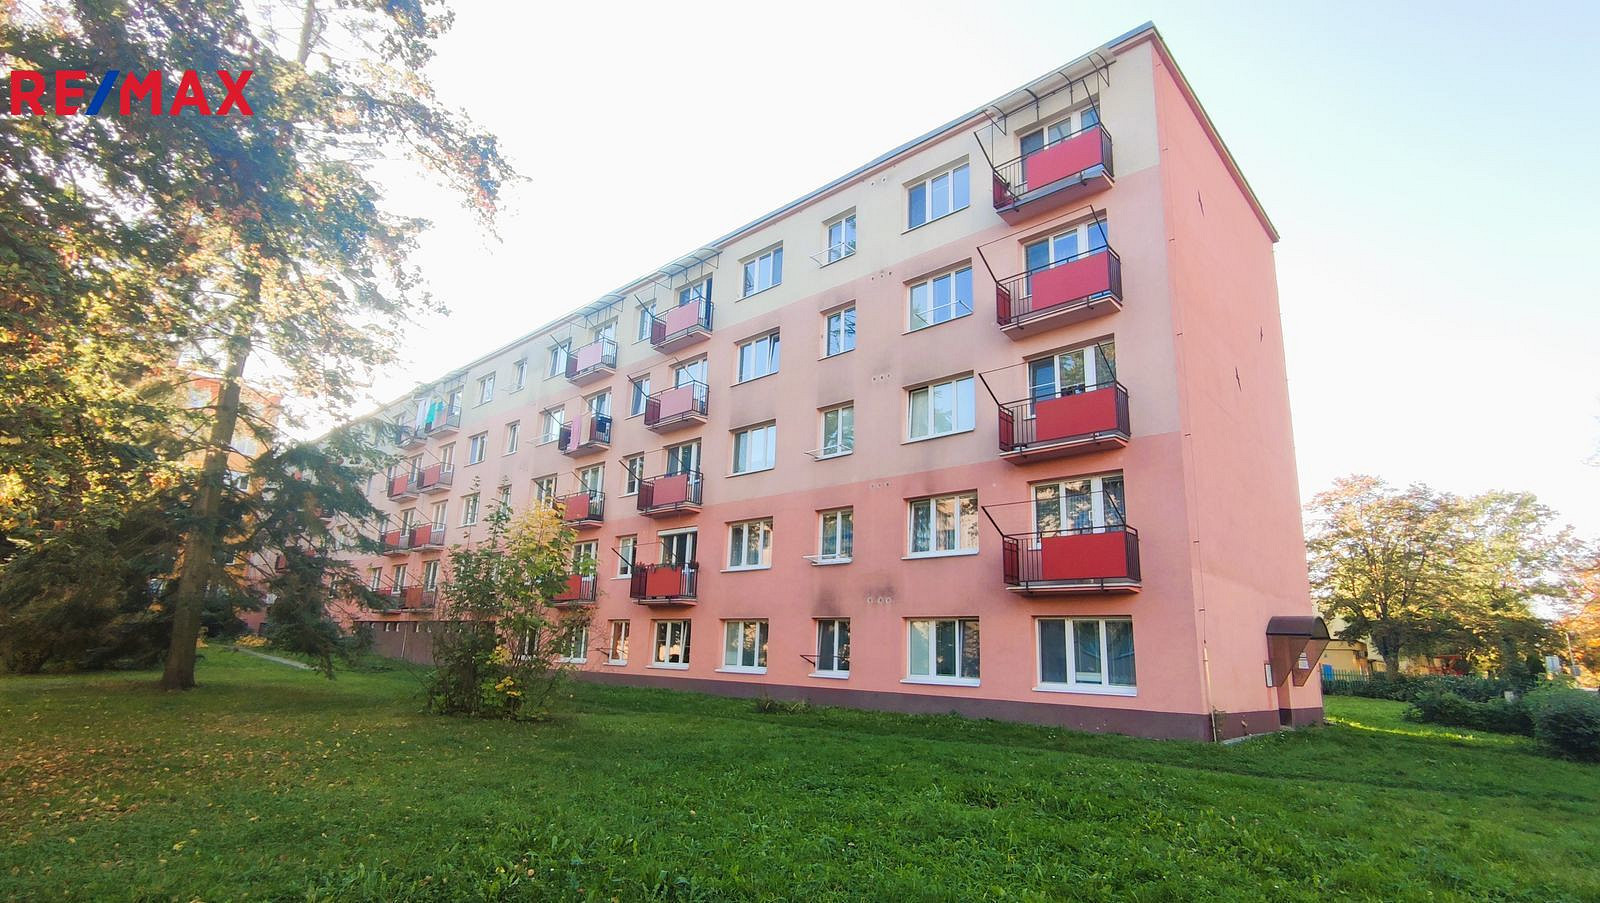 Žilinská, Ostrava - Poruba